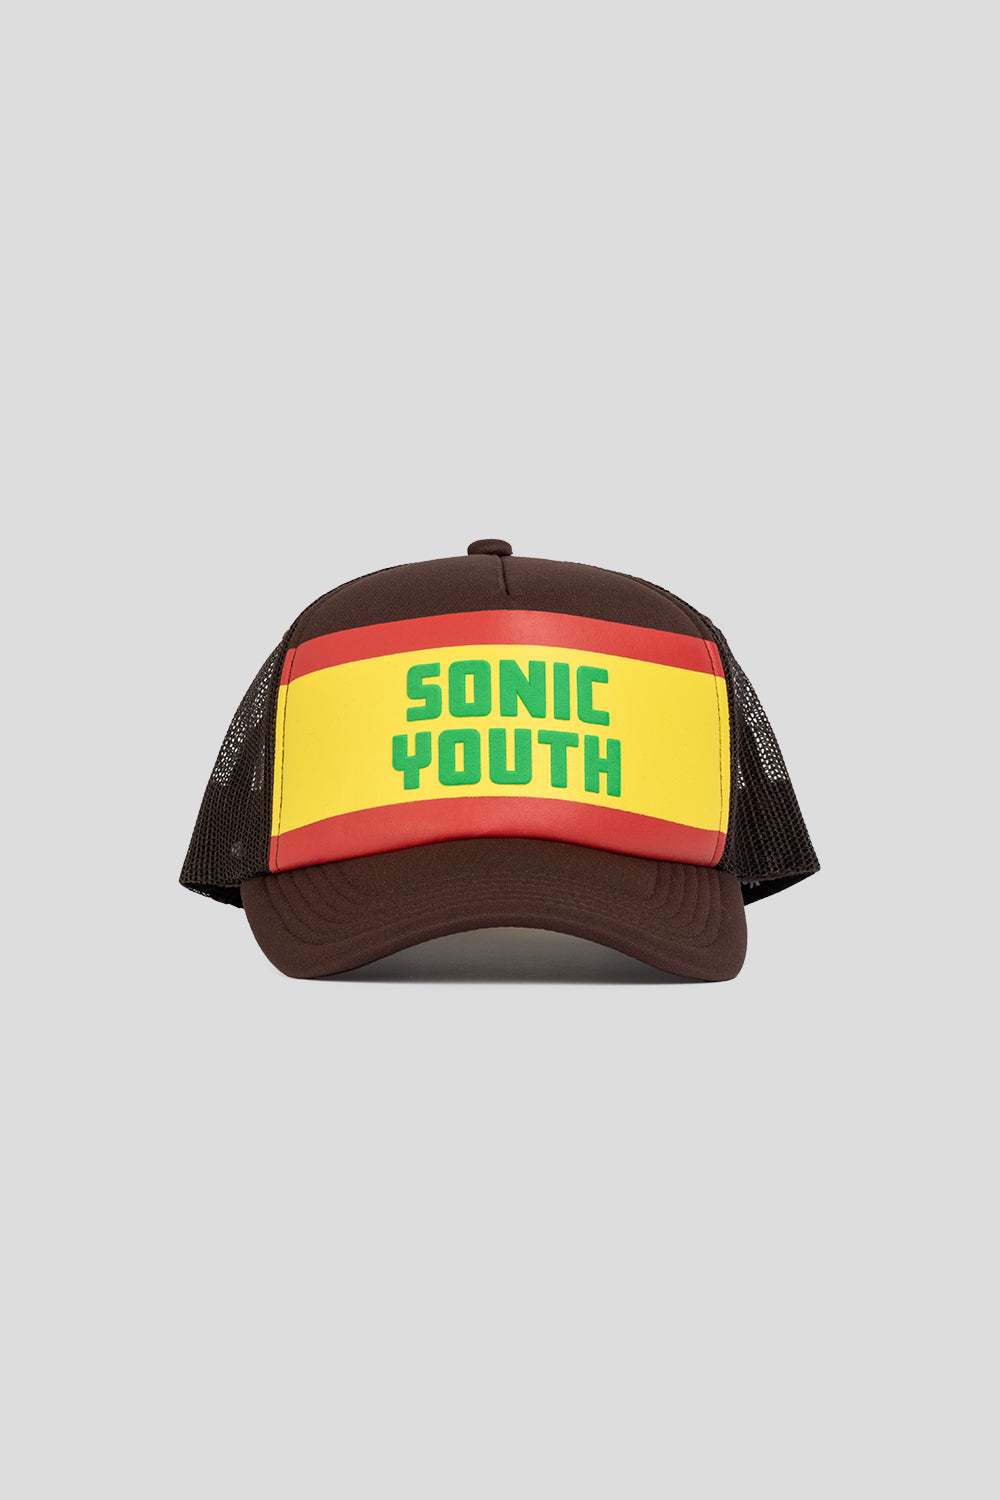 Sonic Youth Trucker Hat